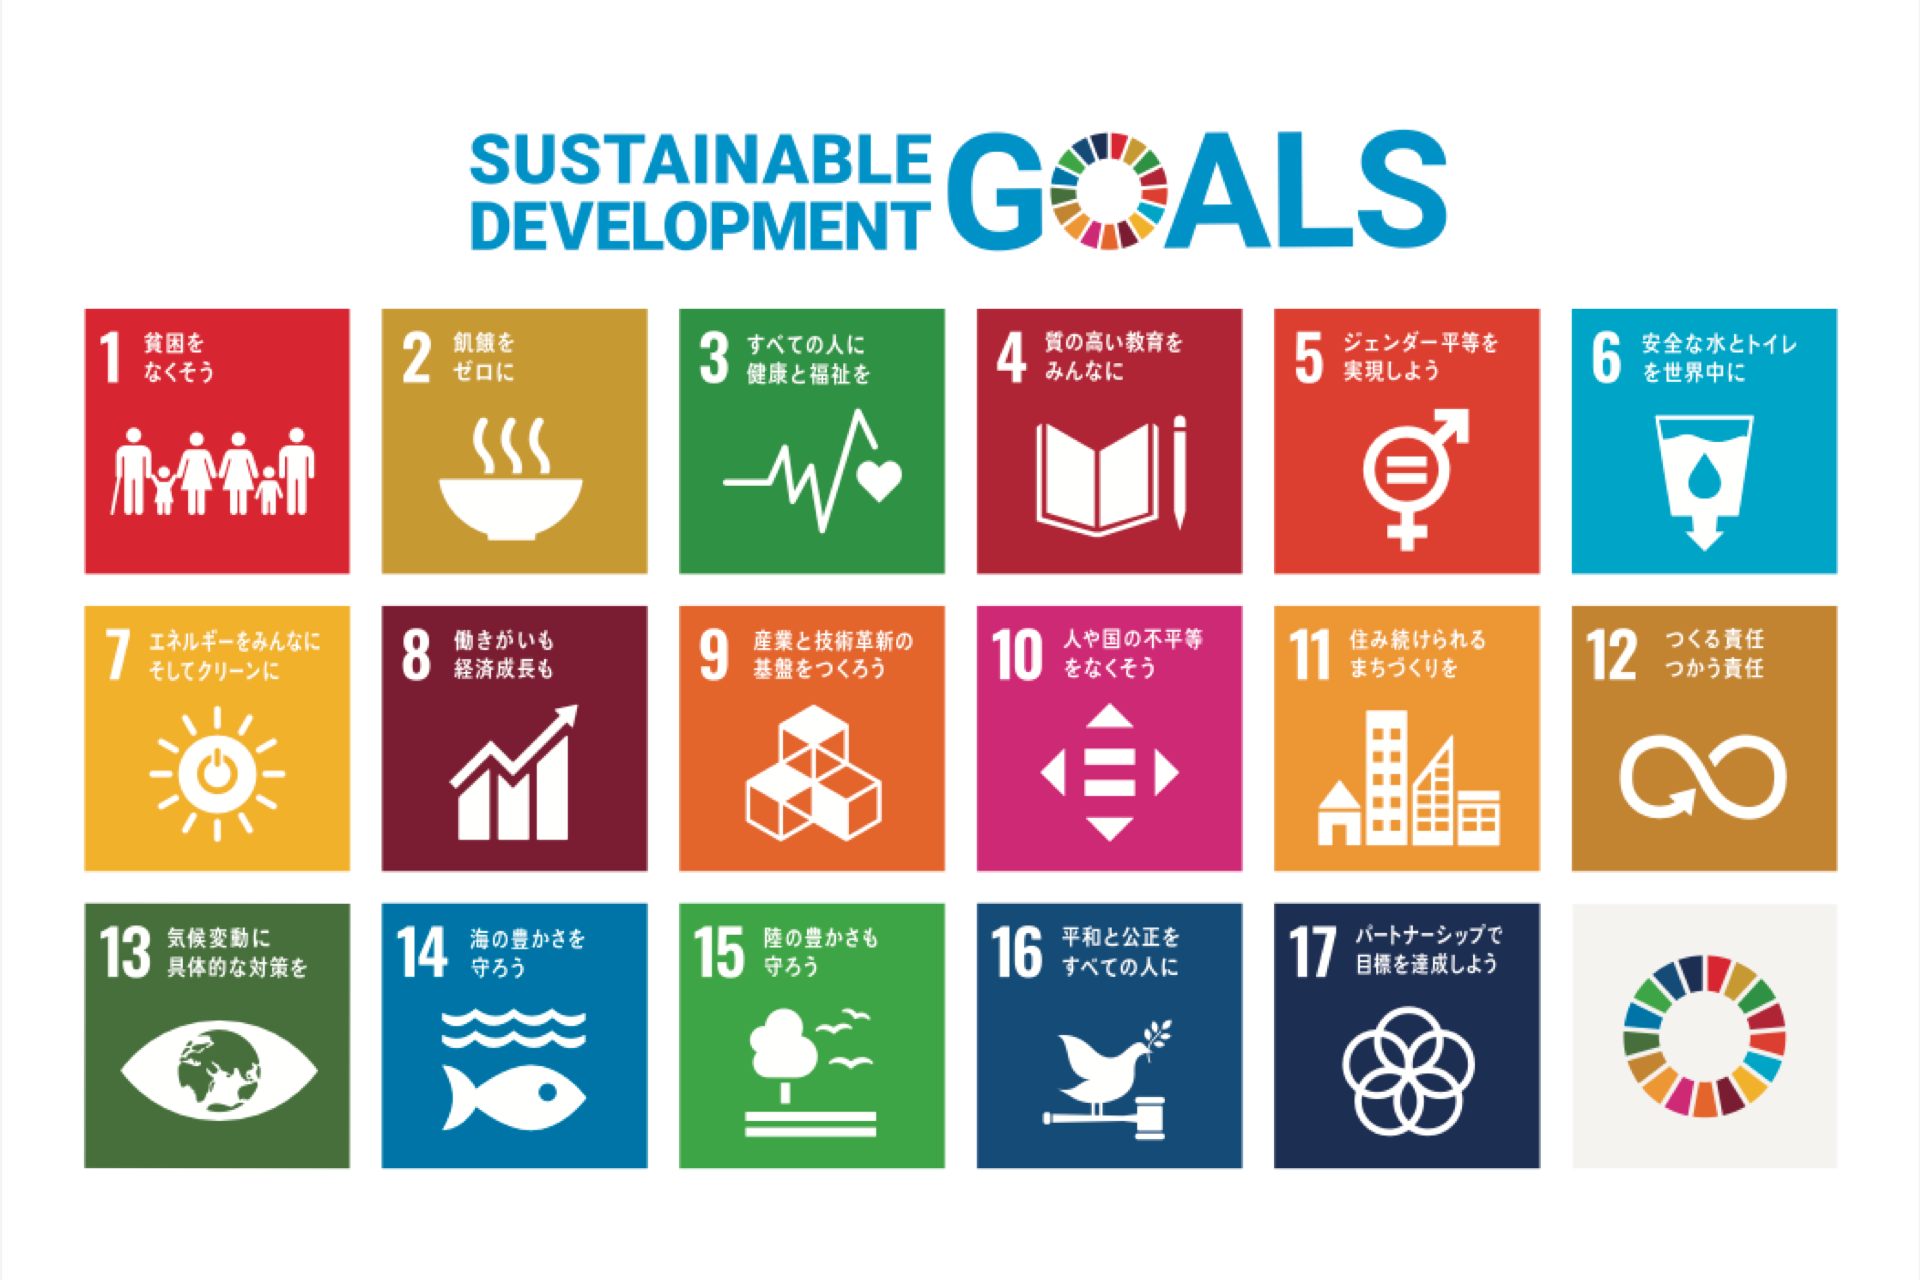 About SDGs